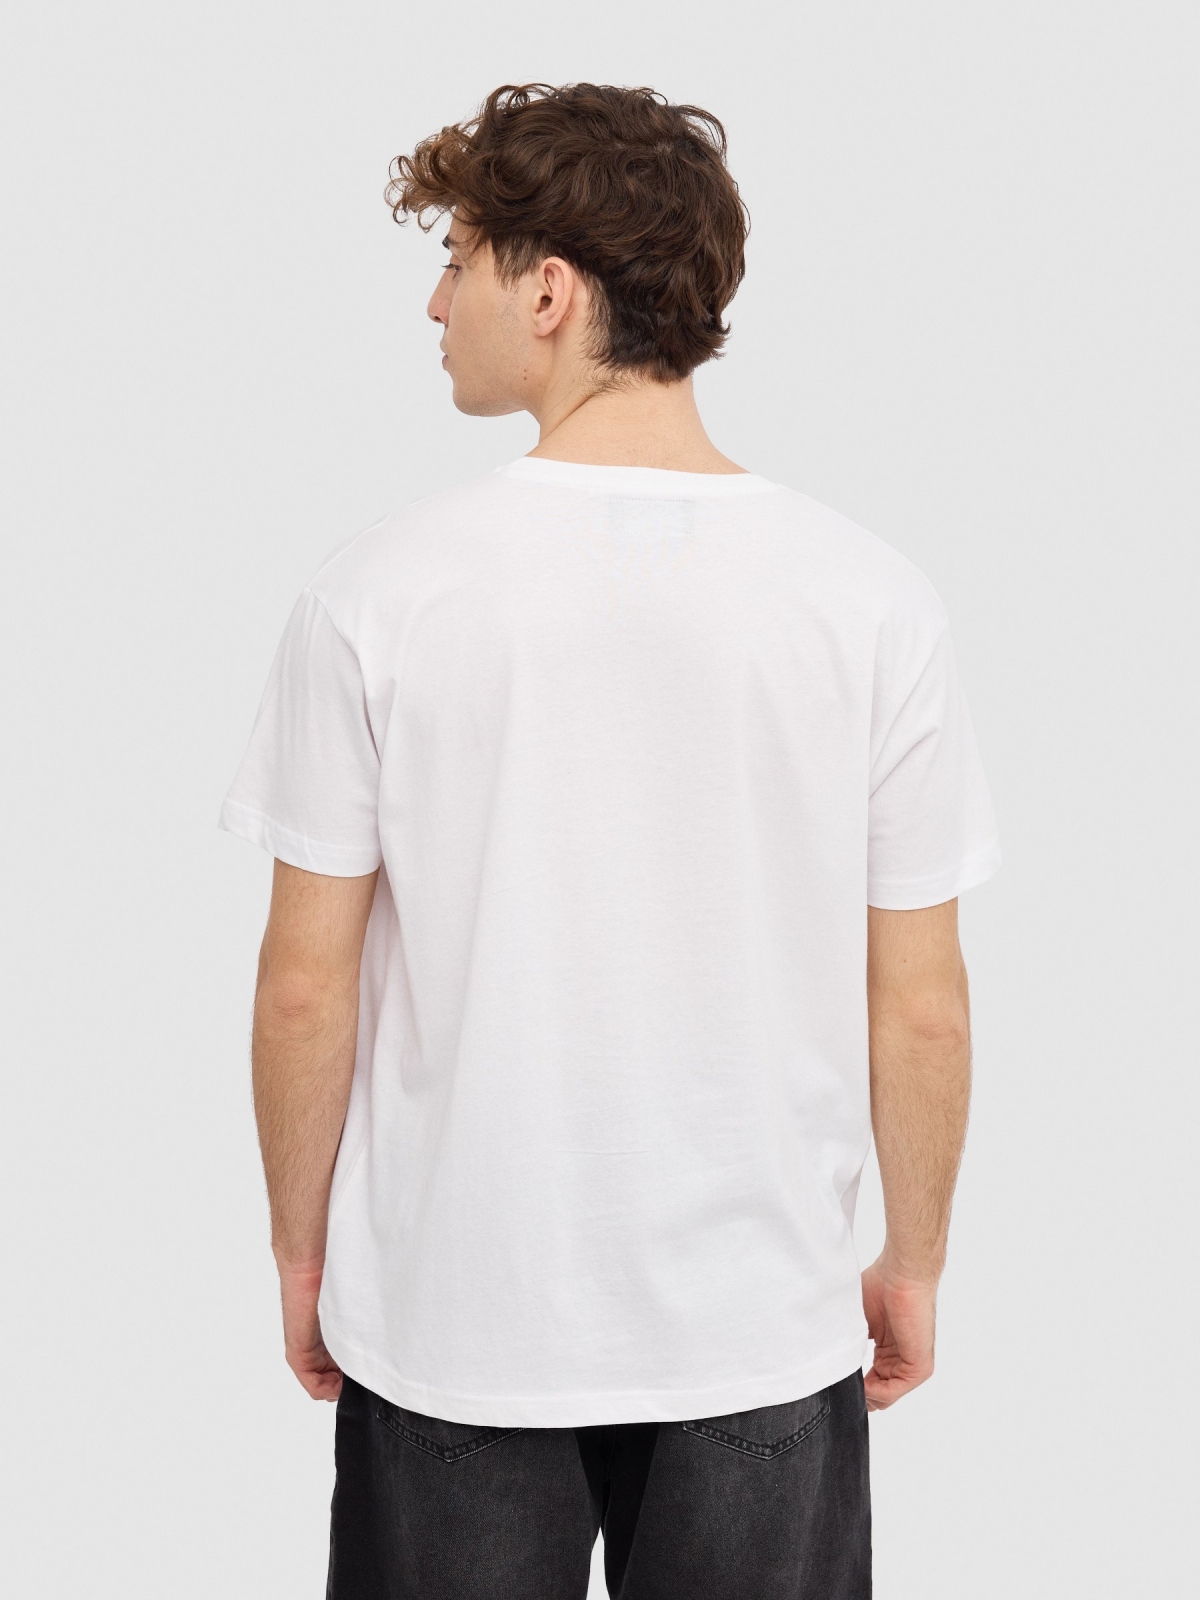 Camiseta Game Center blanco vista media trasera